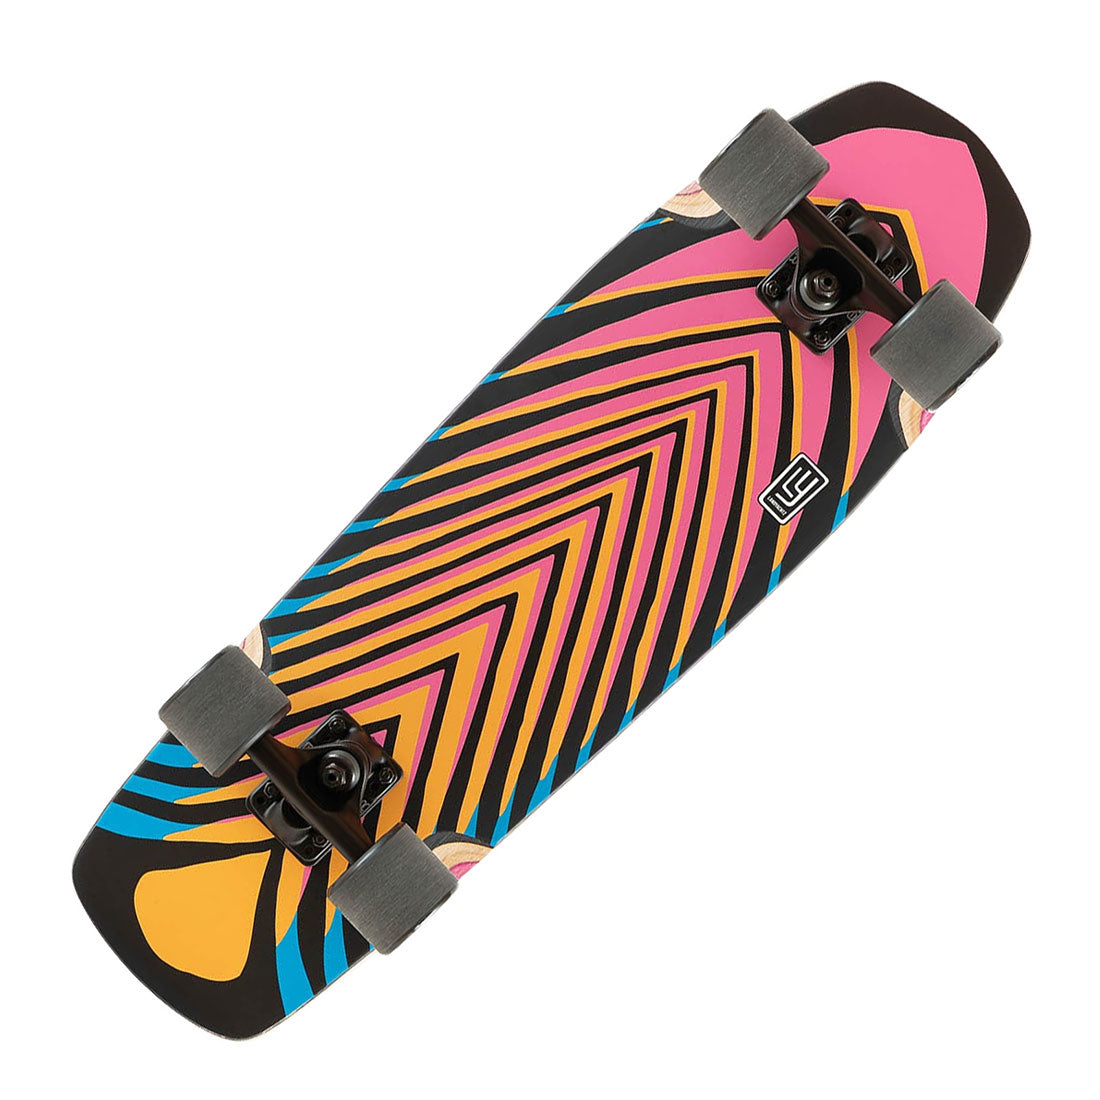 Landyachtz Dinghy Coffin XL 28.2 Complete - Fish Skateboard Compl Cruisers